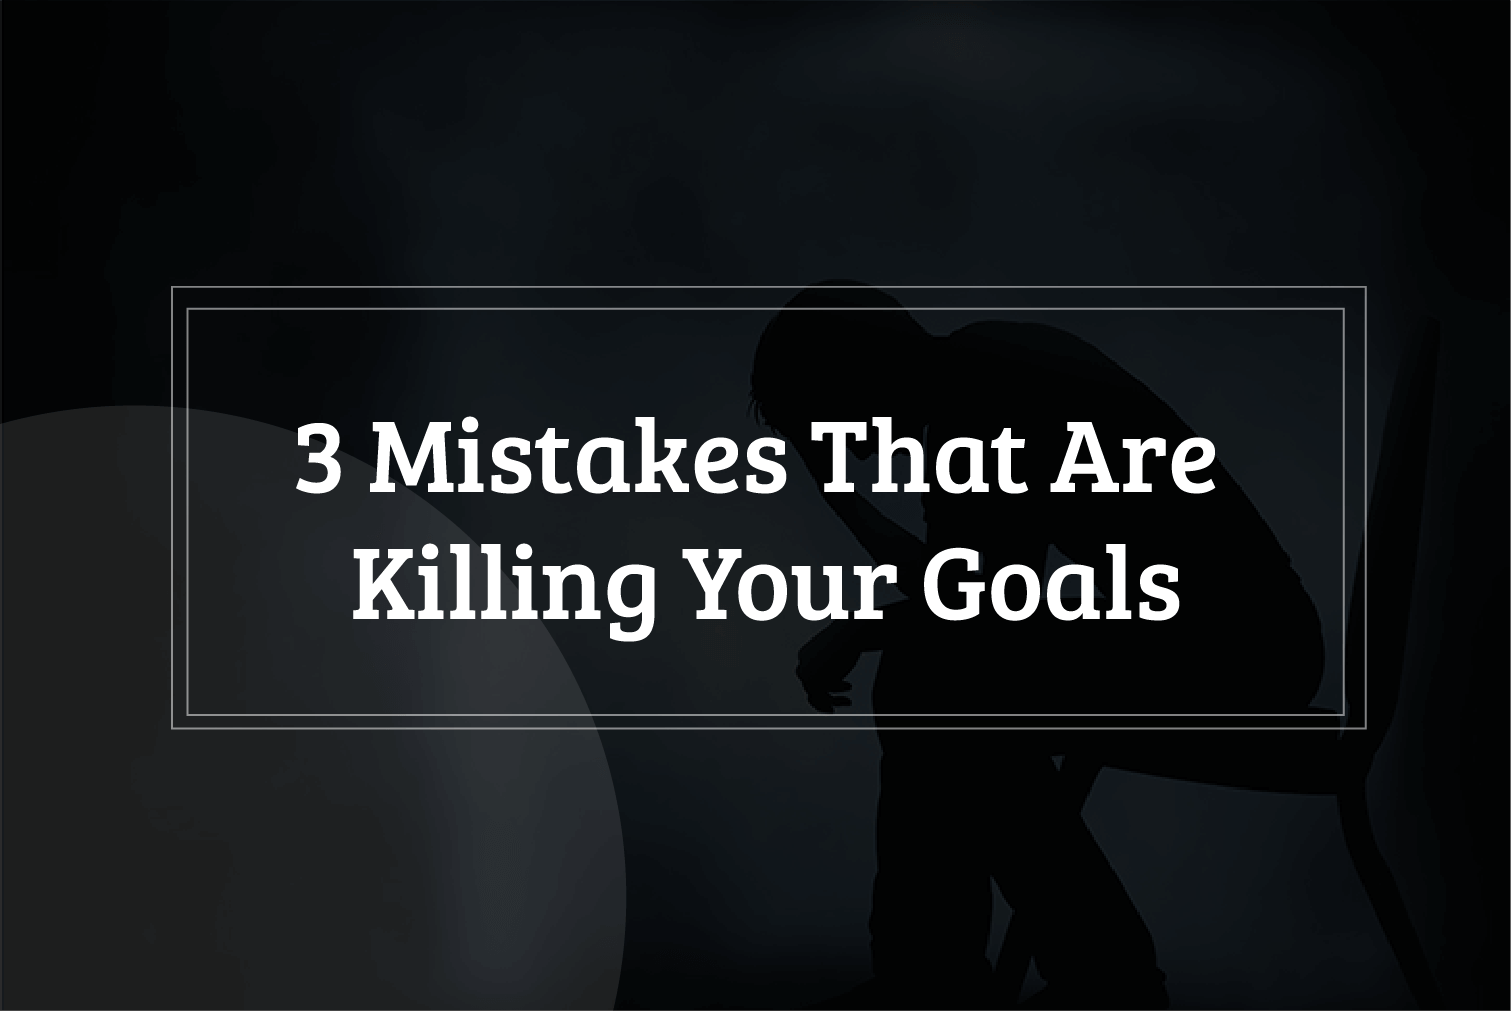 Goal killing Mistakes in Life